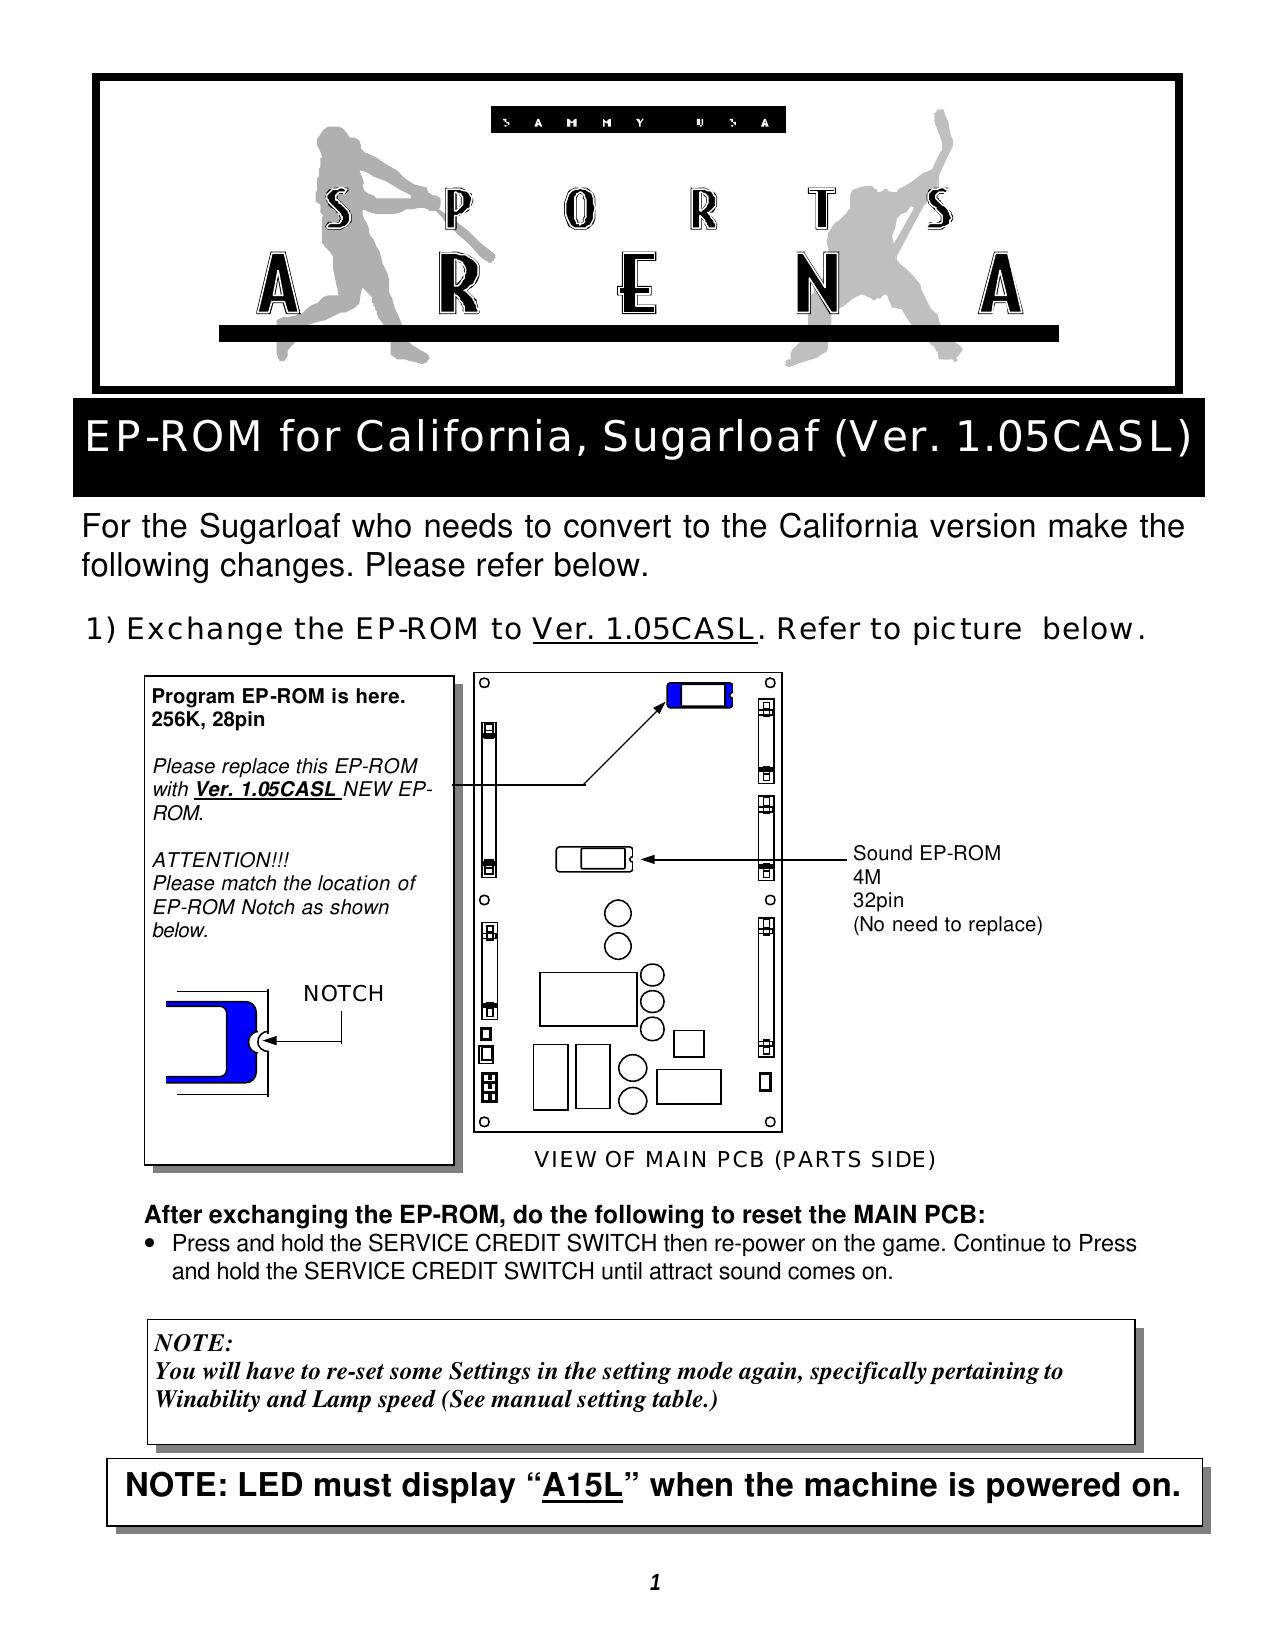 071601 CA SGLF EP-ROM exchange instruction sheet (A15L).pub